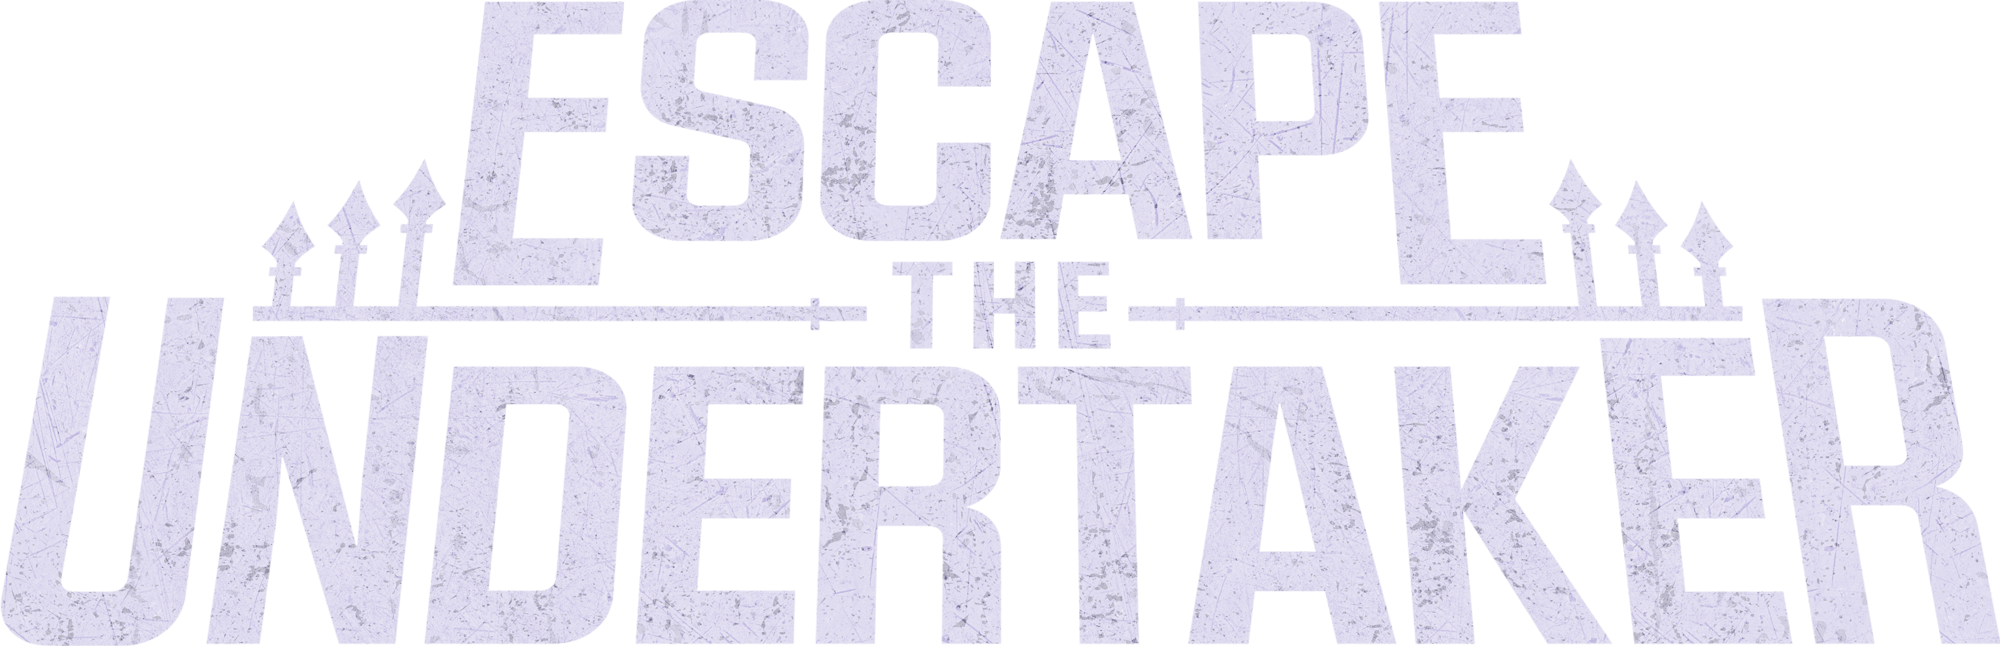 Escape the Undertaker | Netflix Logo Concept, Finishing & Illustration